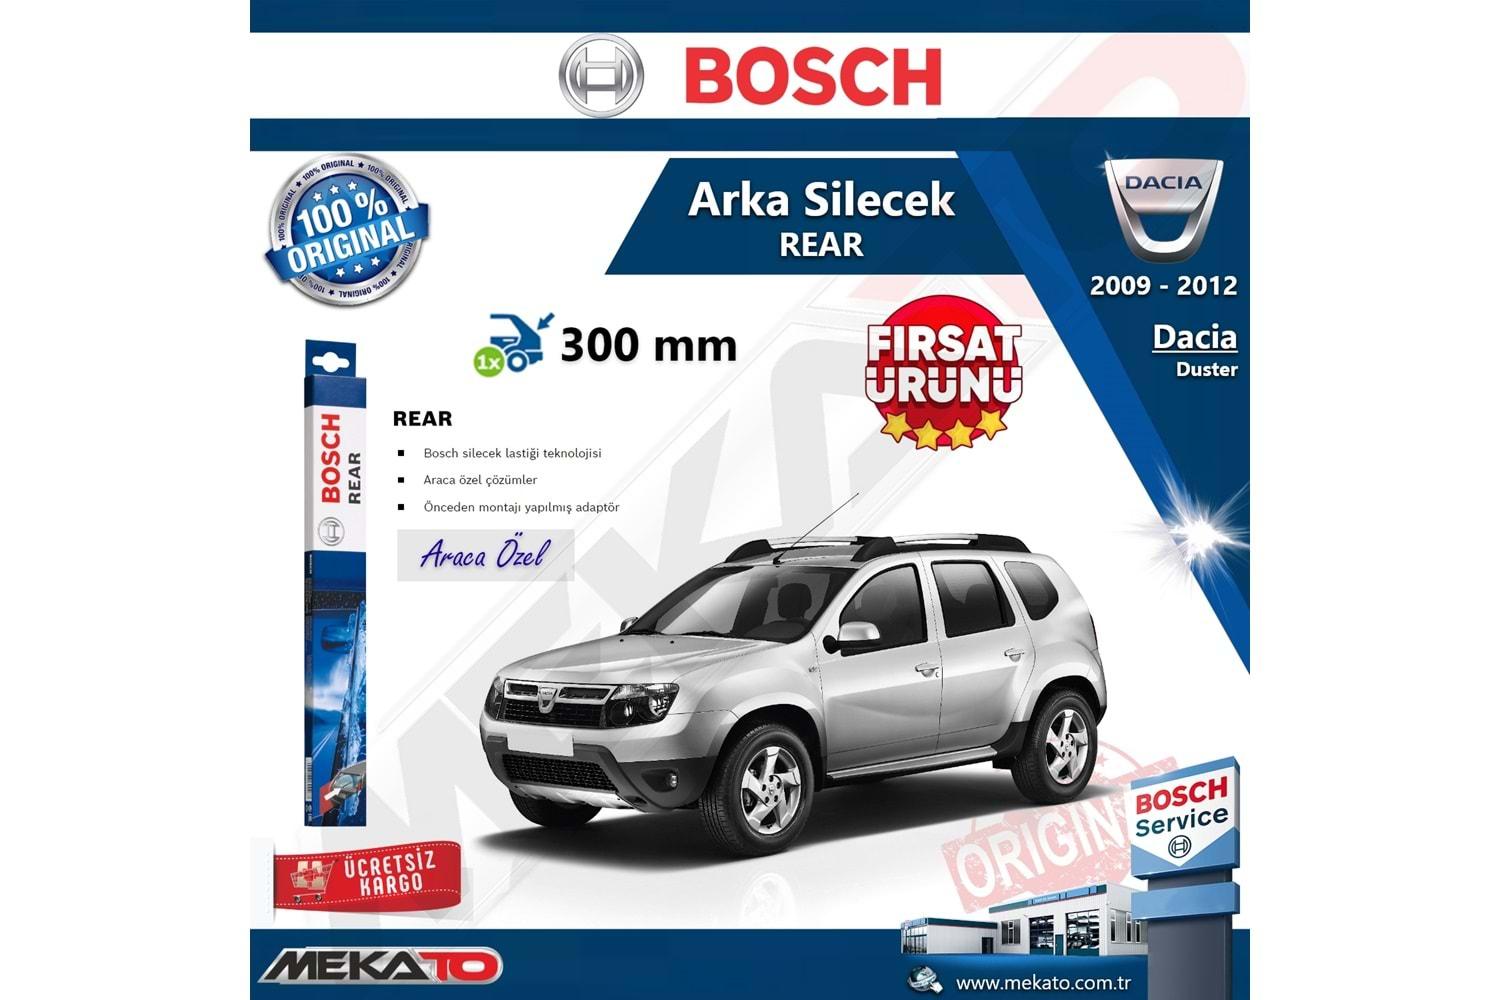 Dacia Duster Arka Silecek Bosch Rear 2009-2012